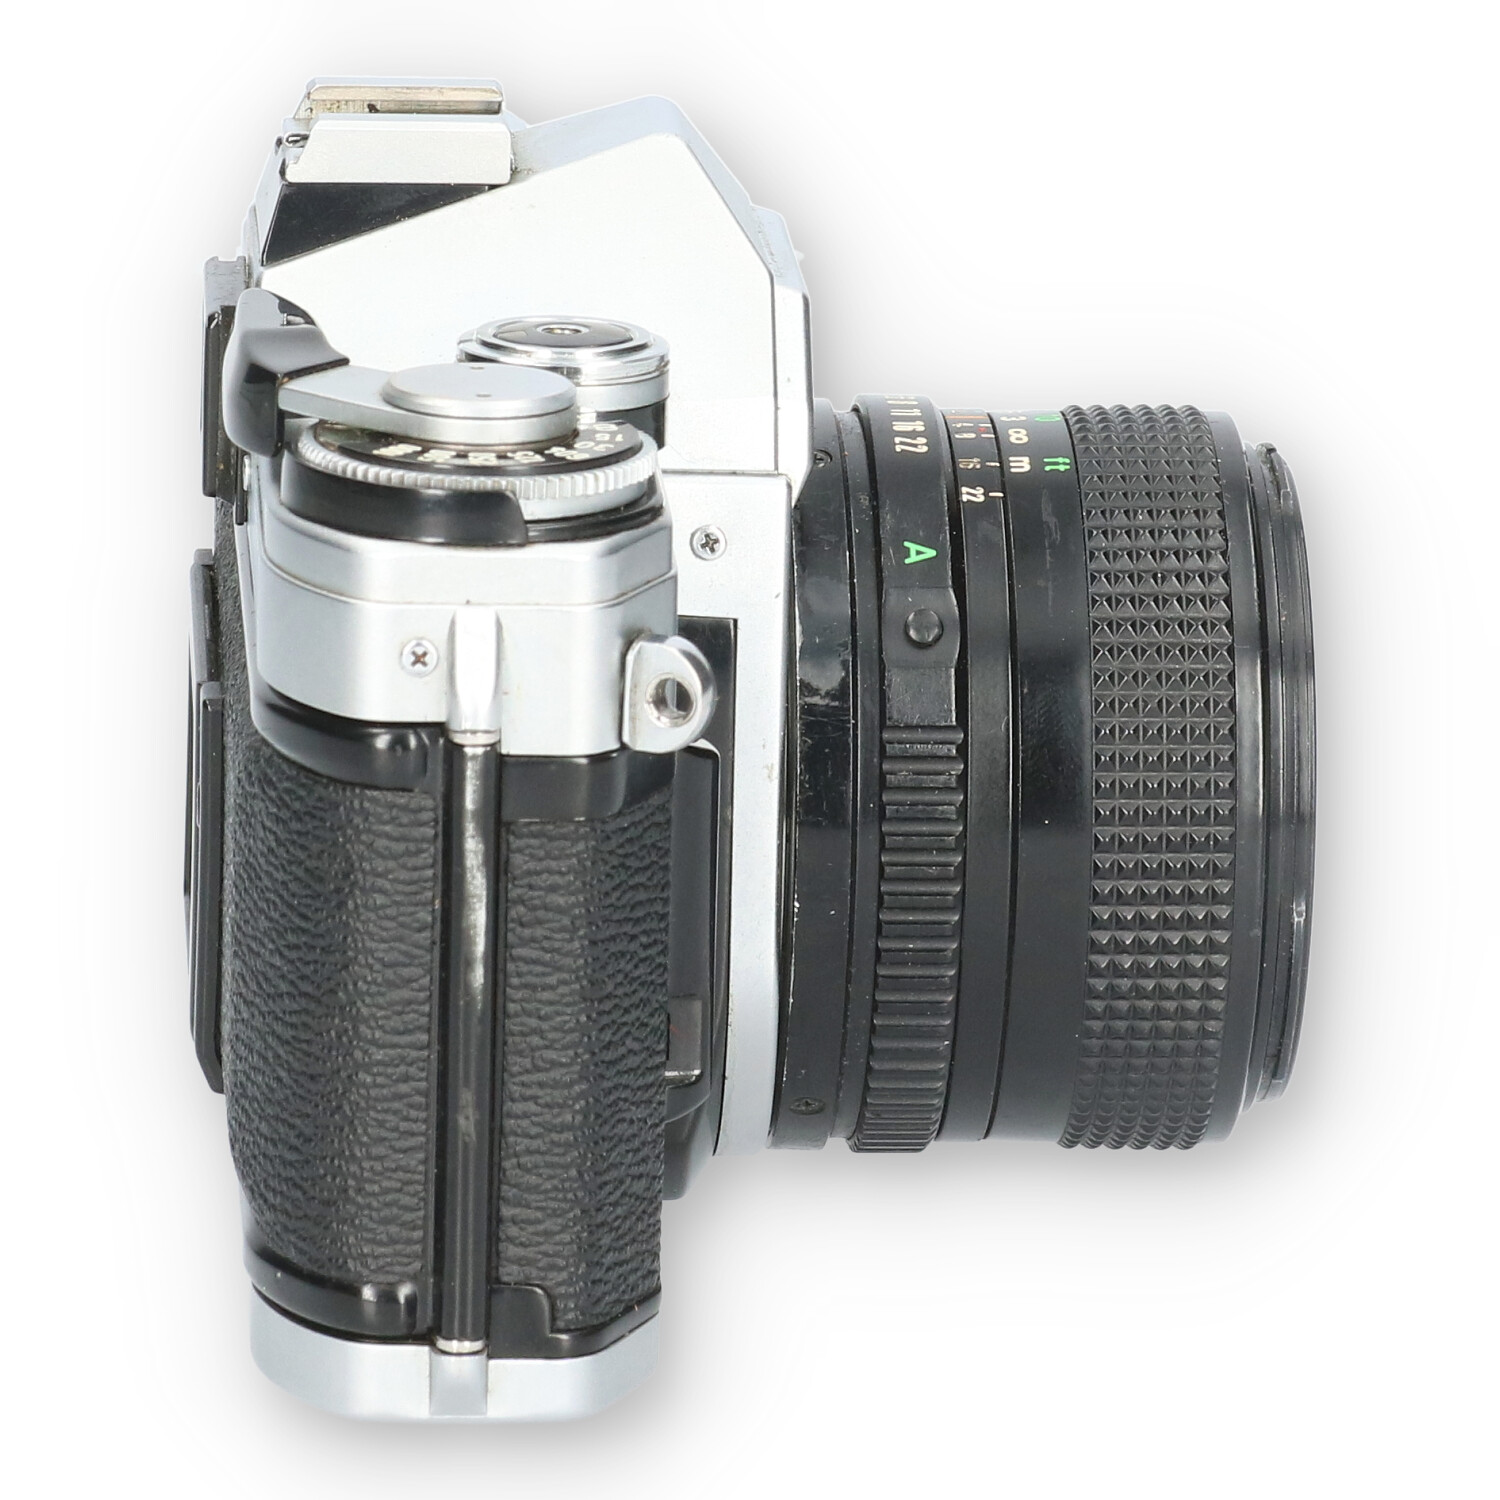 Canon AE1 + FD 28 mm ƒ/2.8 - No-Digital